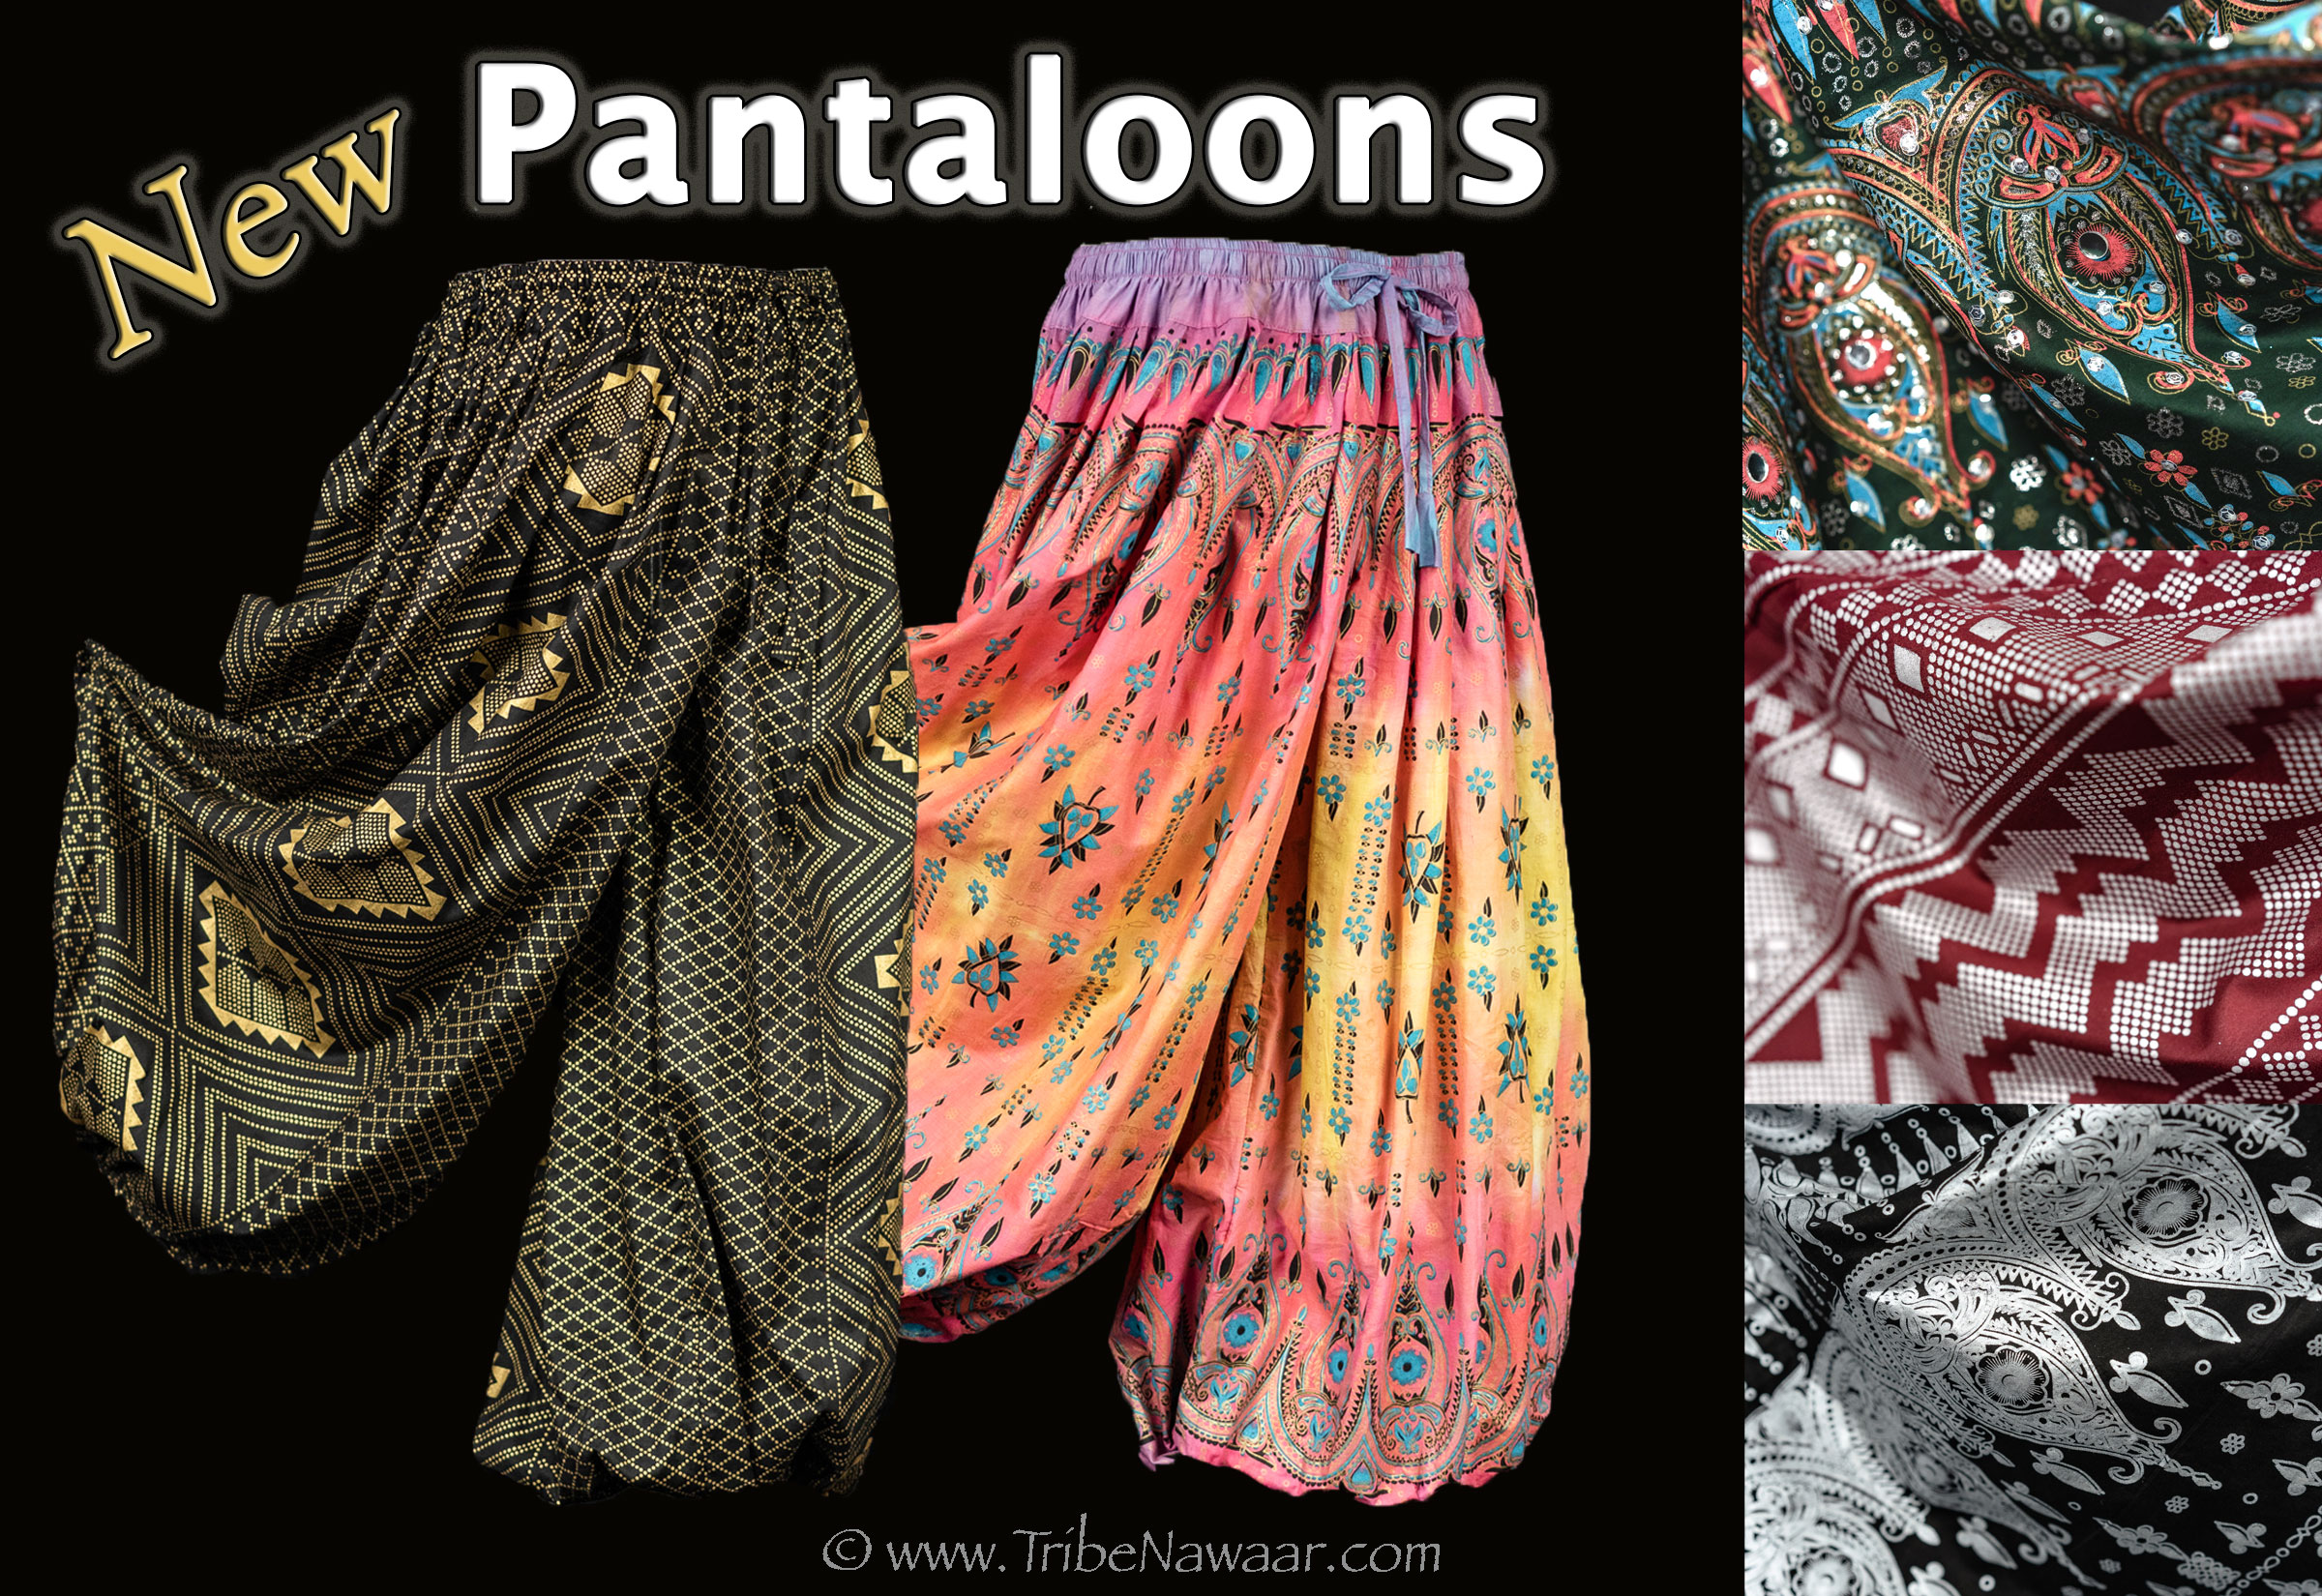 New pantaloons (aka harem pants, bloomers or salawar) from Tribe Nawaar